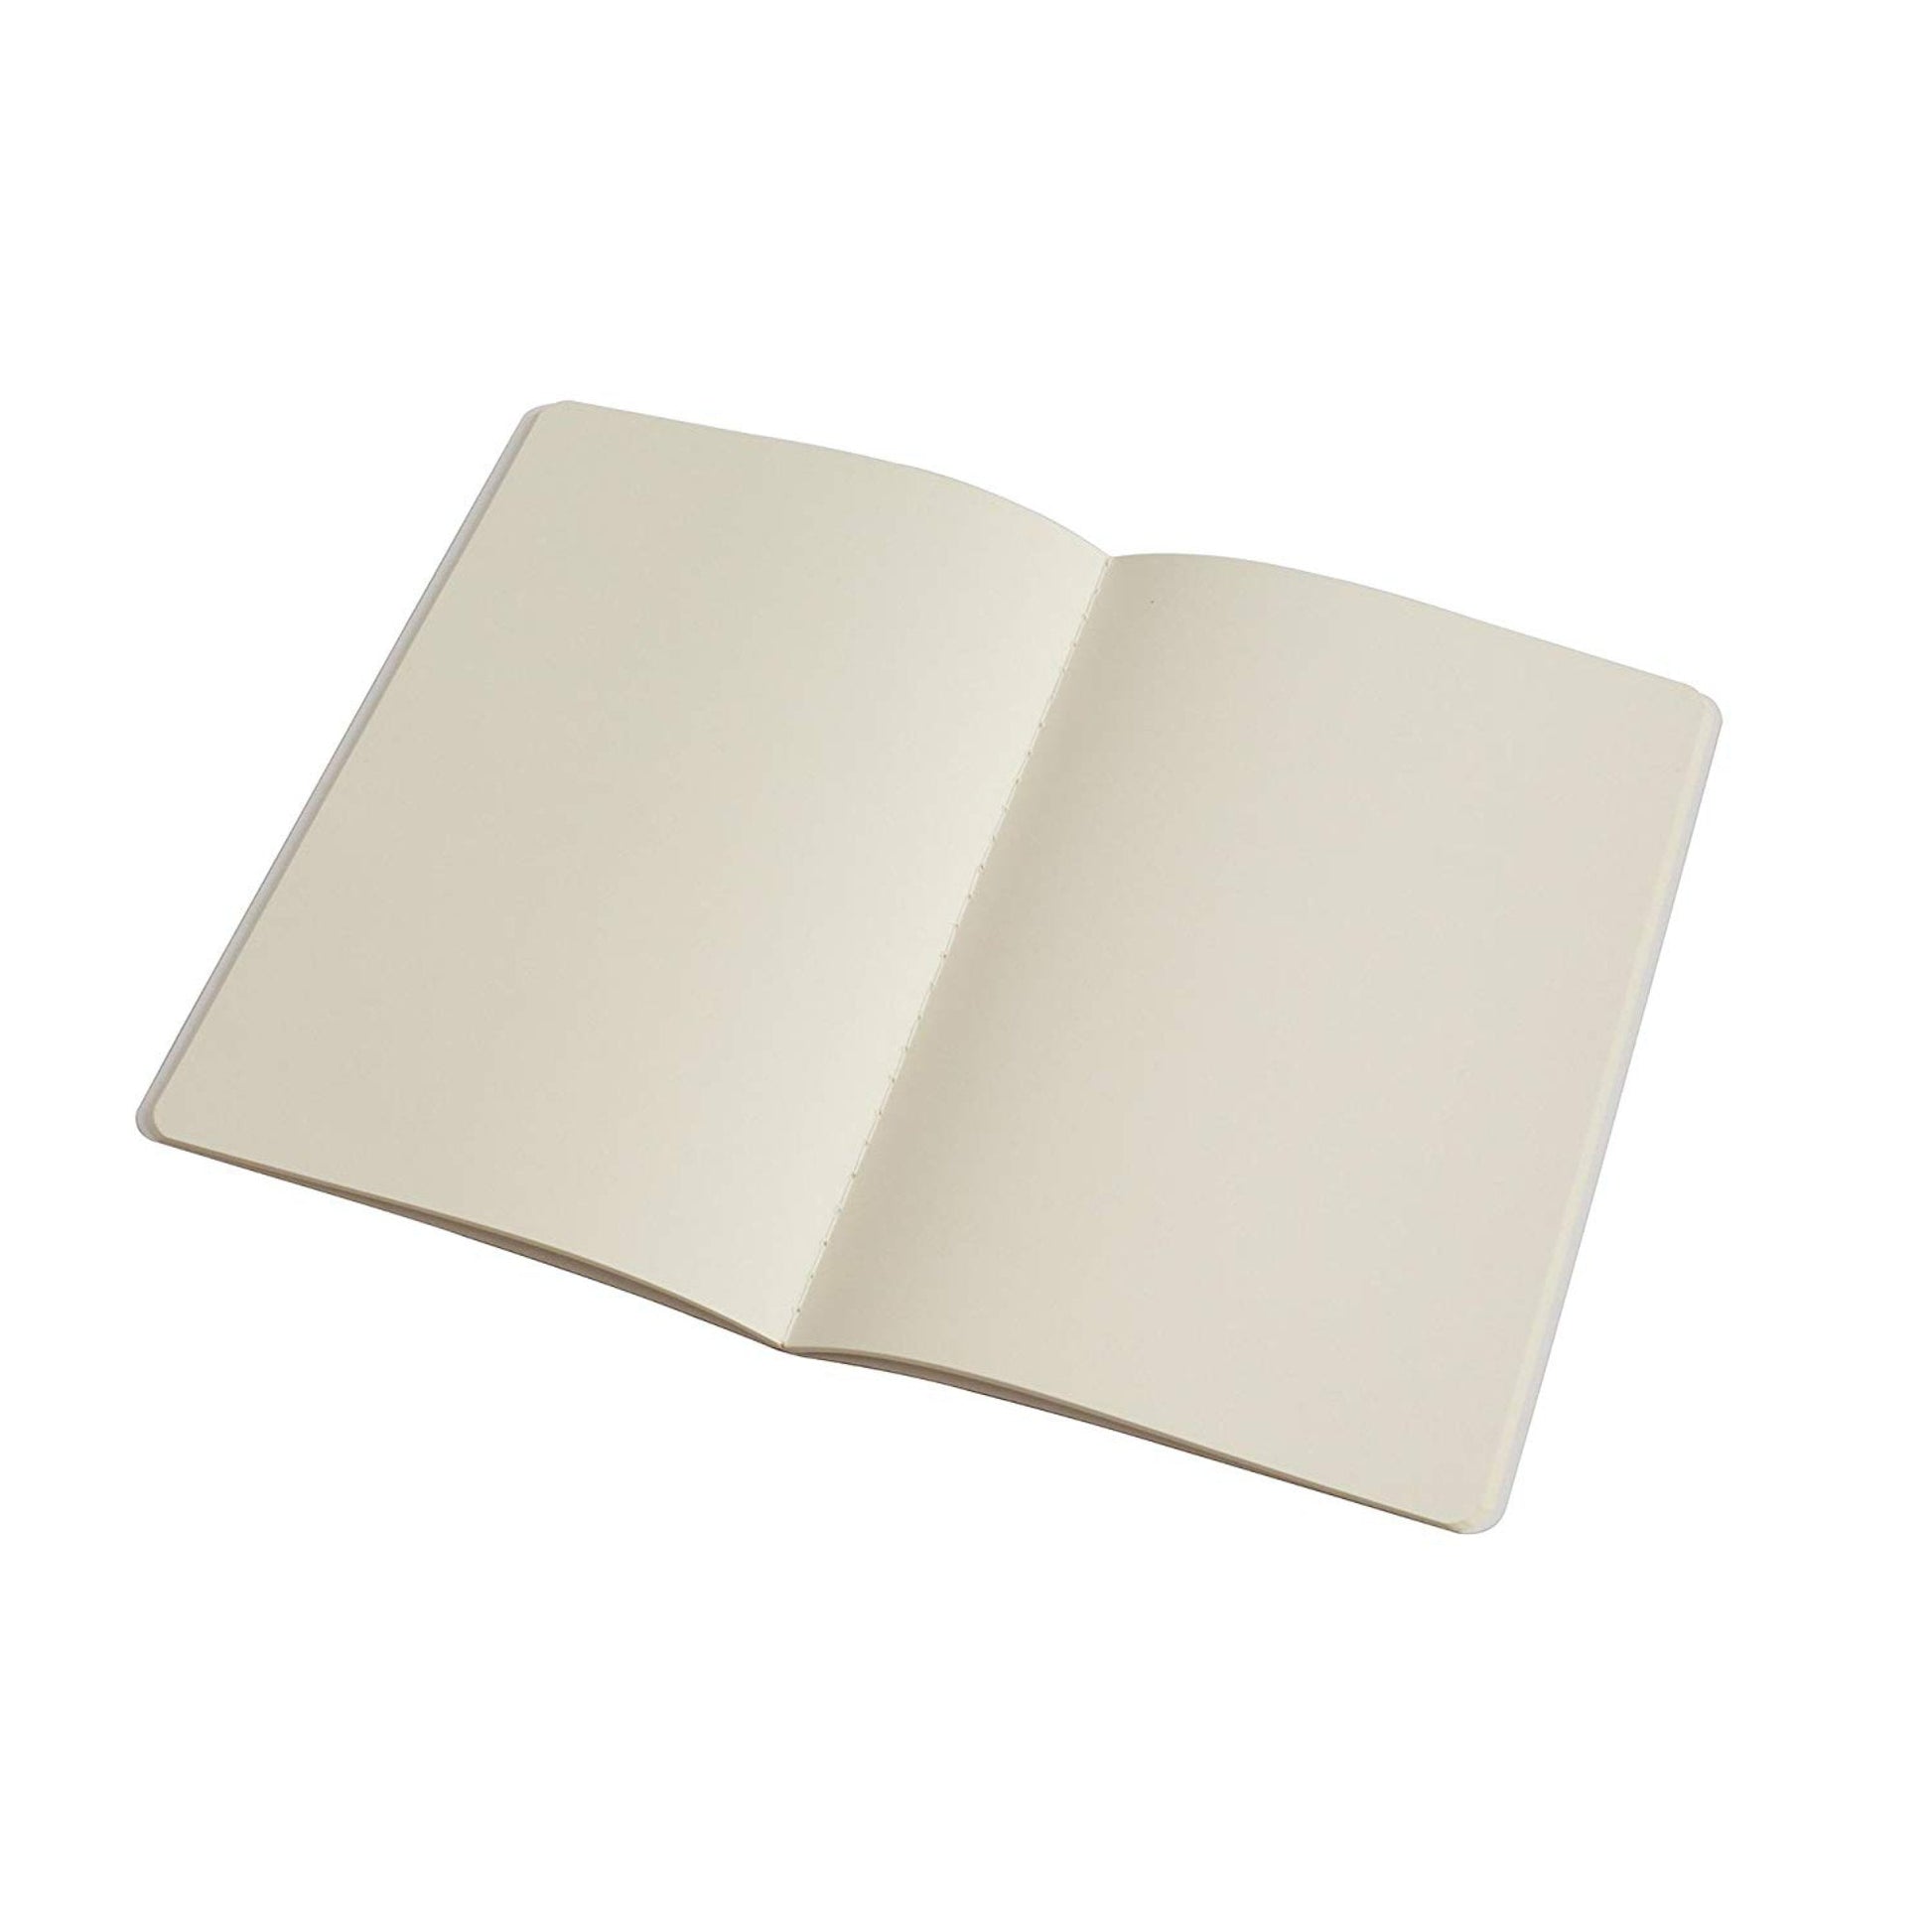 PinkPolish Design Notebook "Bonnet" Fairy Inspired Notebook / Sketchbook / Journal